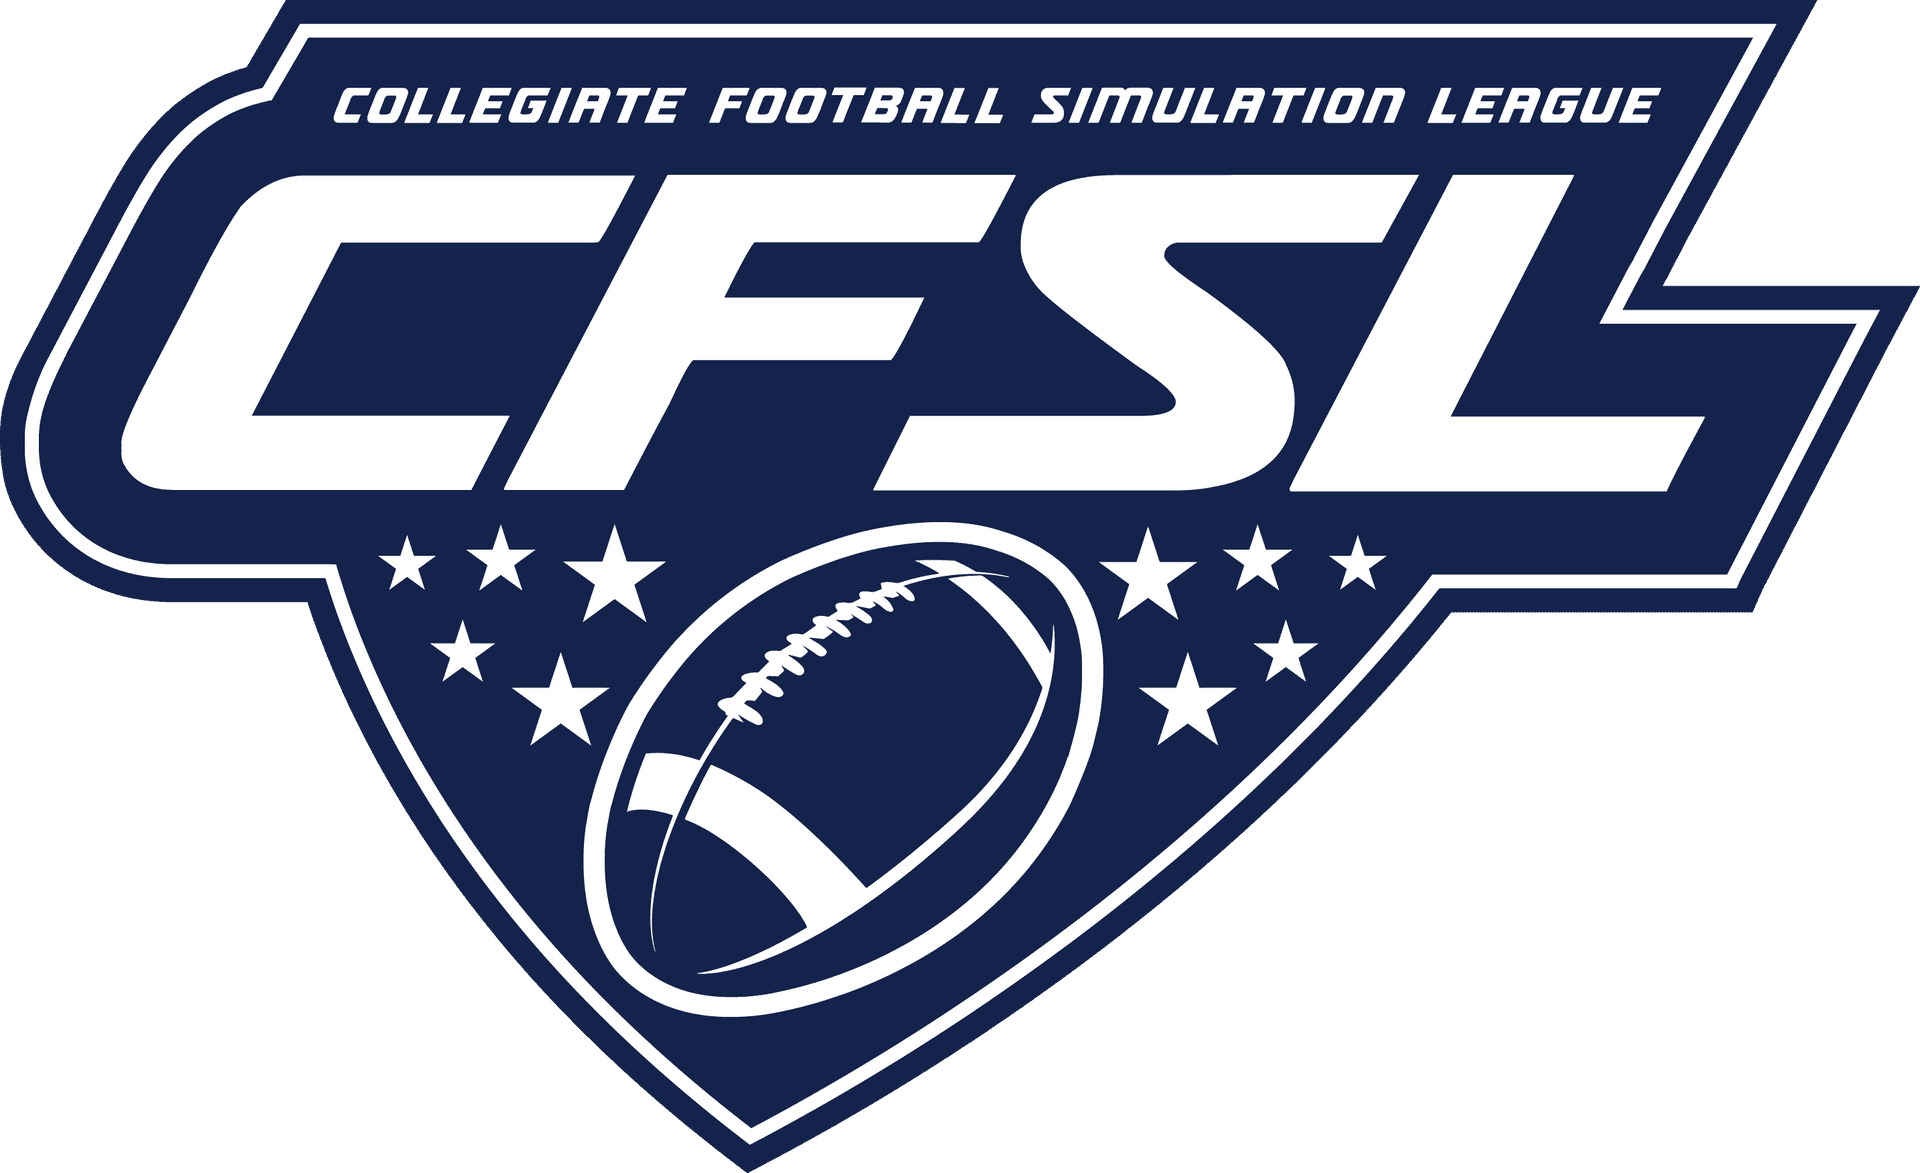 C F S L Collegiate Football Simulation League Logo PNG image